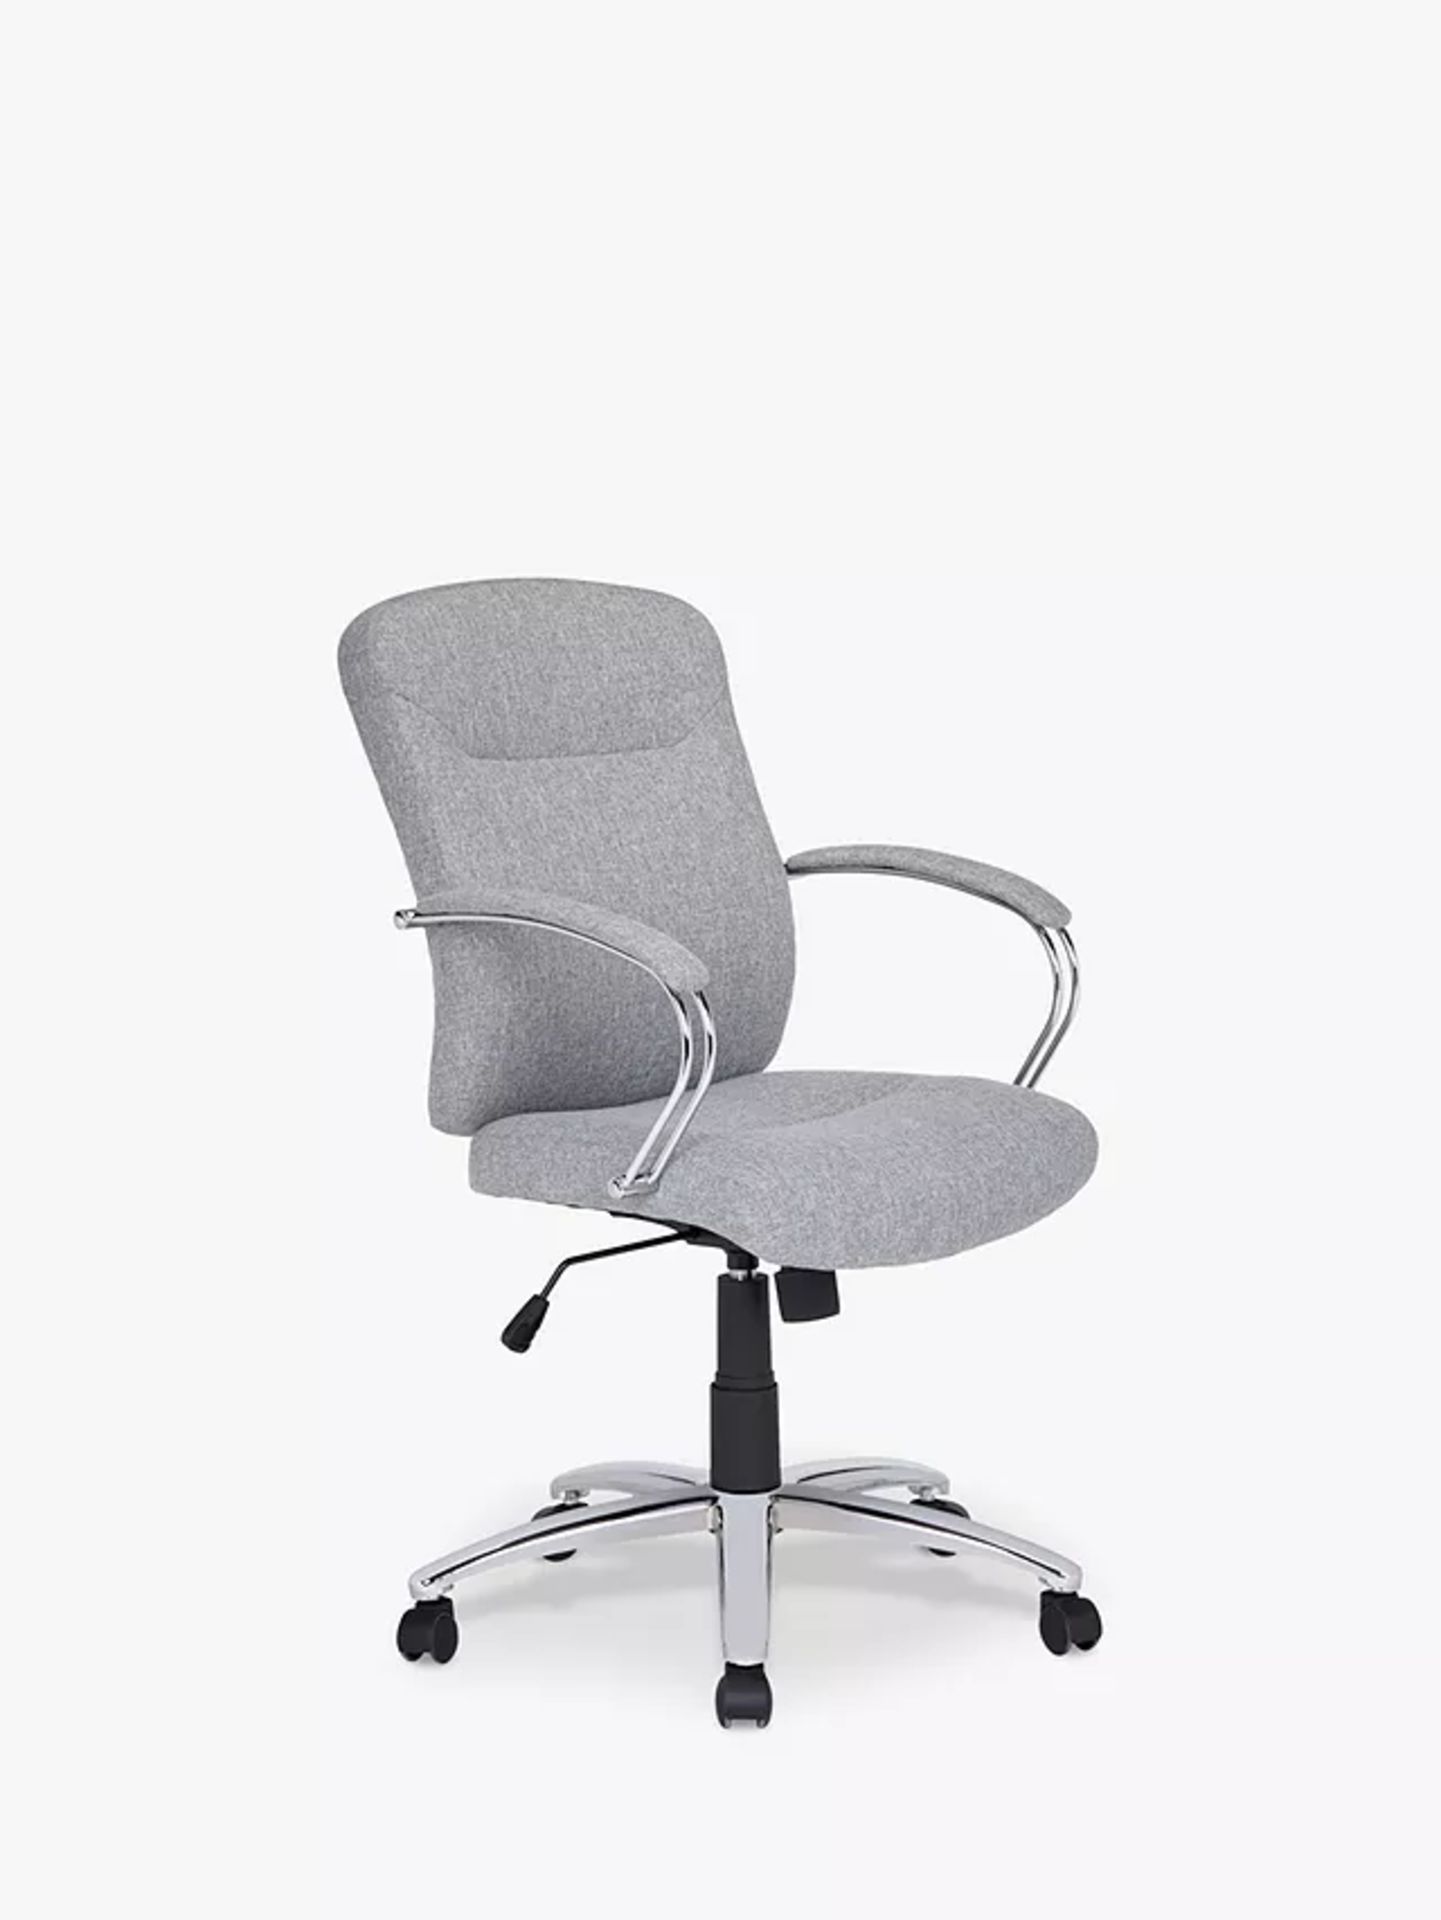 Grade B+ John Lewis &Partners Warner Fabric Office Chair in Grey - RRP: £150